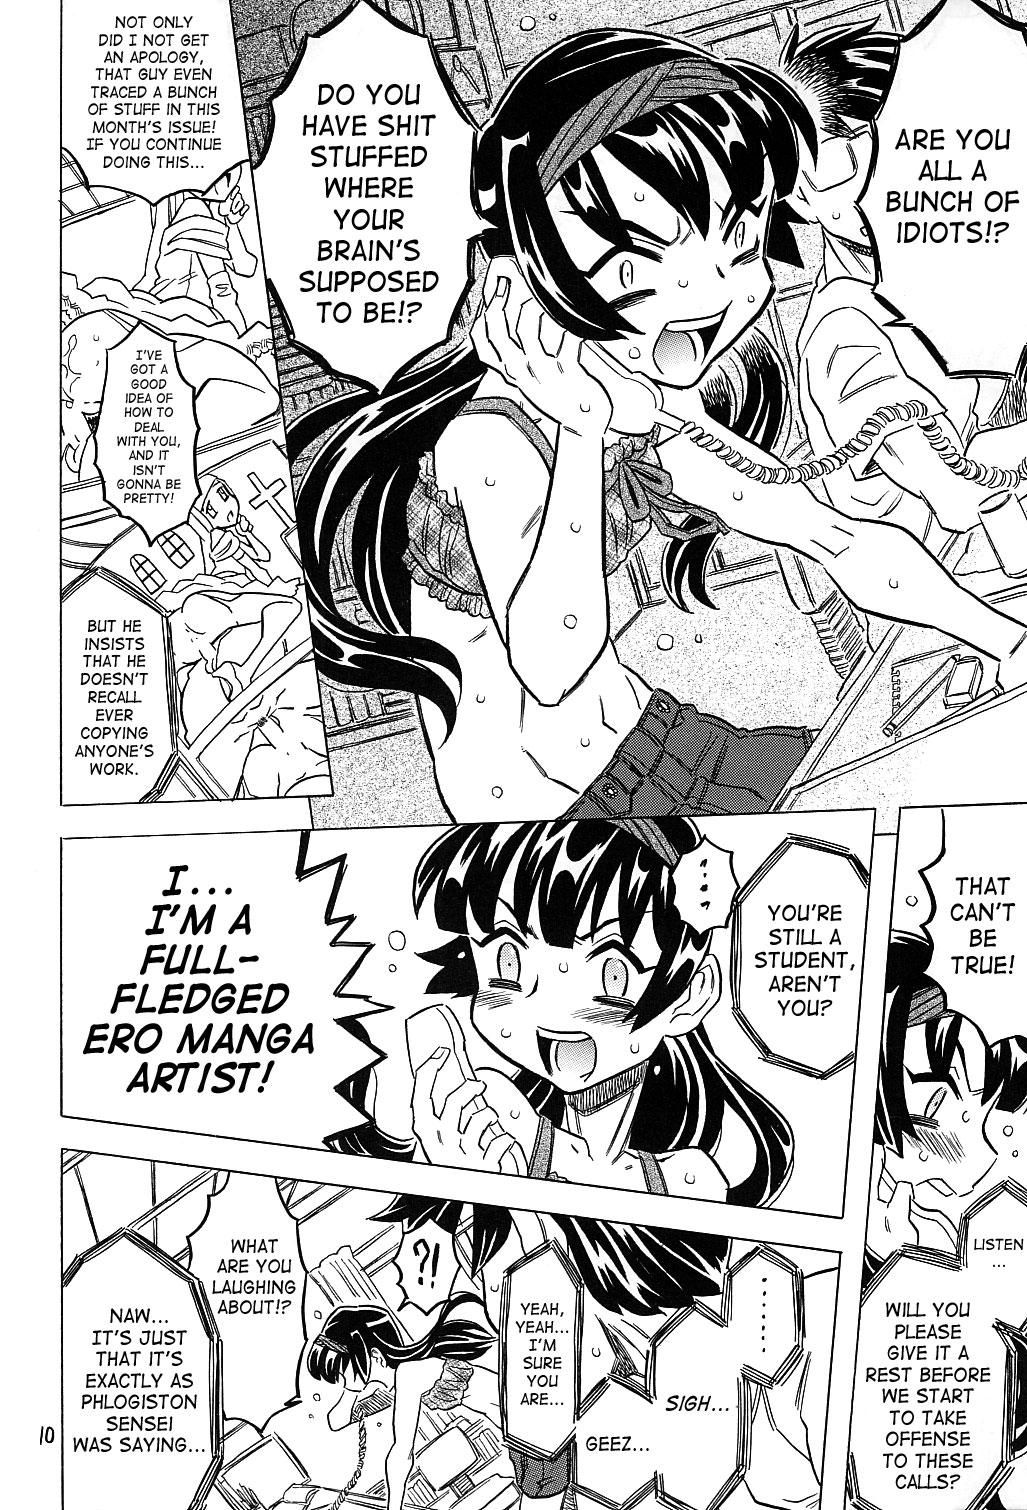 Female Ero Manga Artist Scorned 9